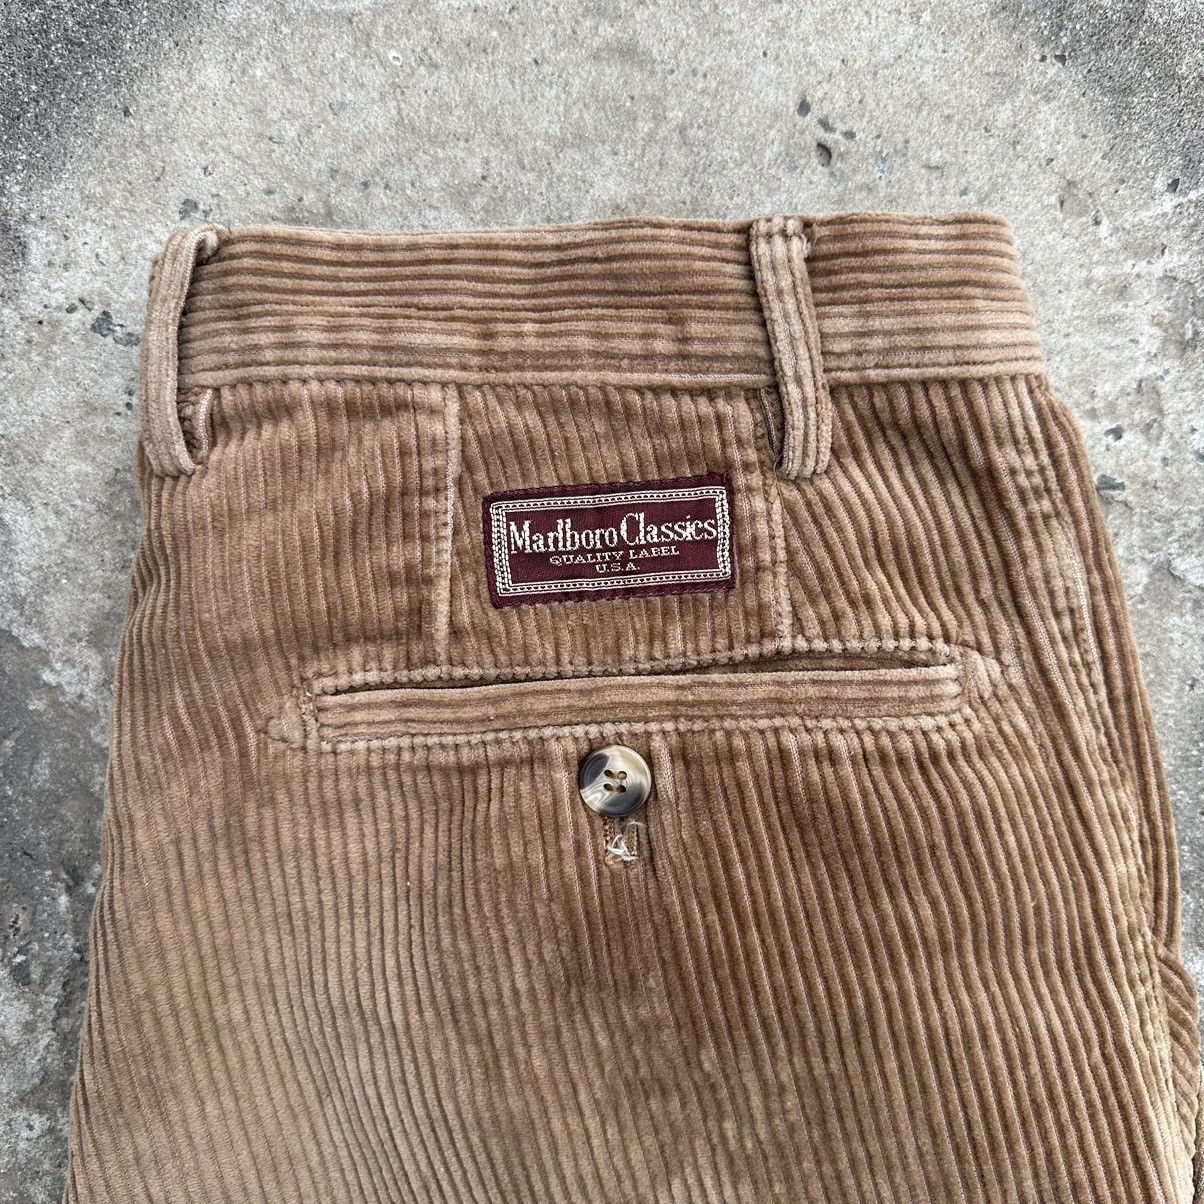 Vintage Vintage Corduroy Pants Marlboro Classic velveteen 90s Size US 32 / EU 48 - 4 Thumbnail